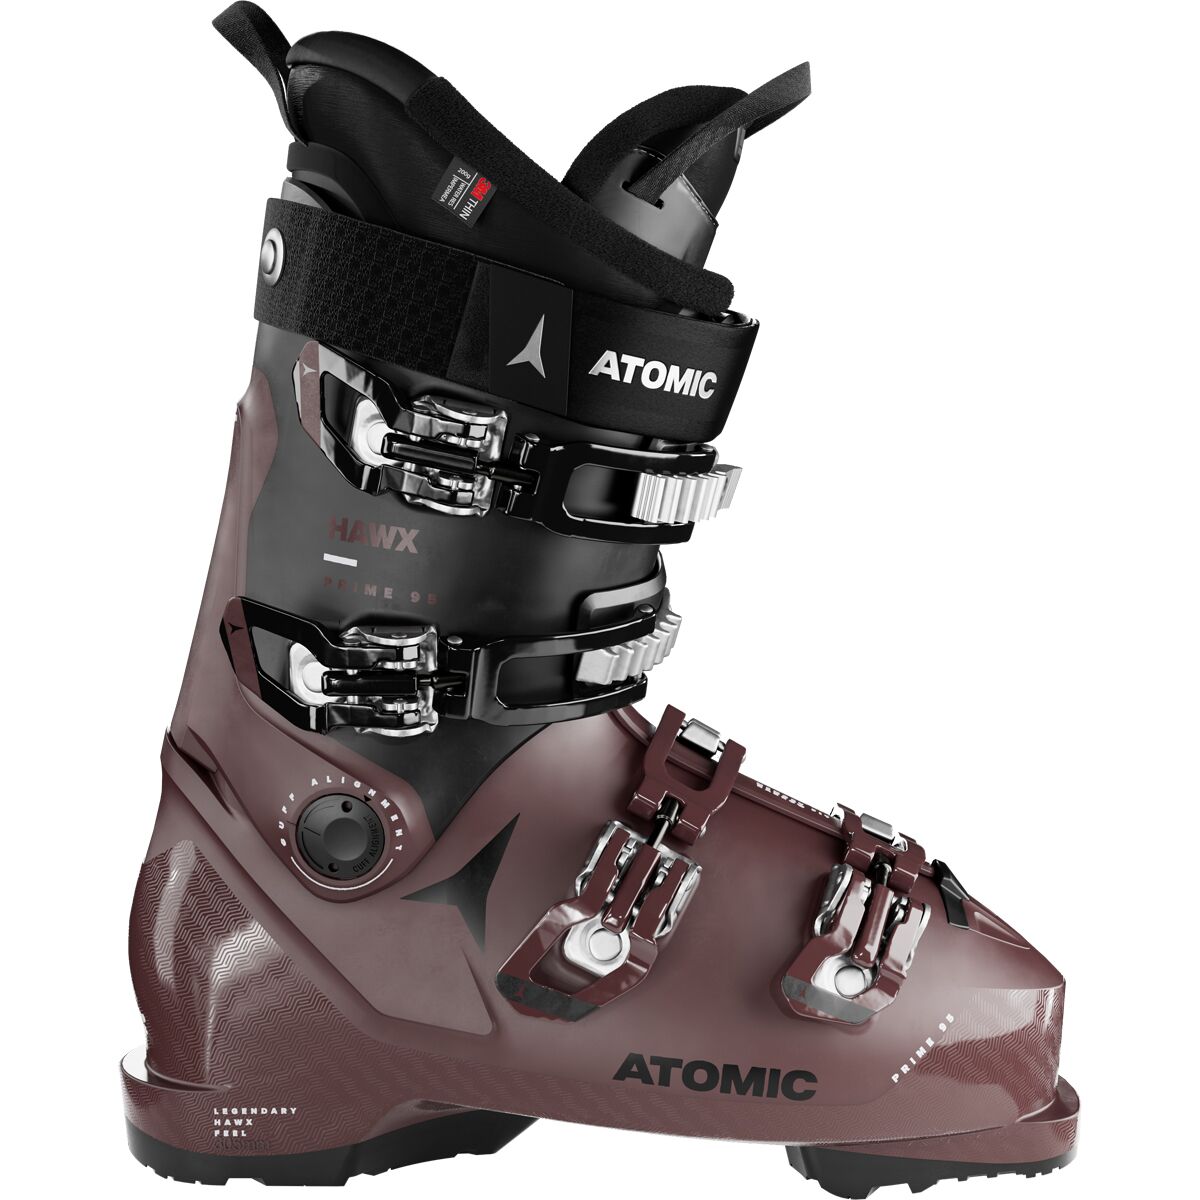 Atomic Hawx Prime 95 Ski Boot - 2024 - Women